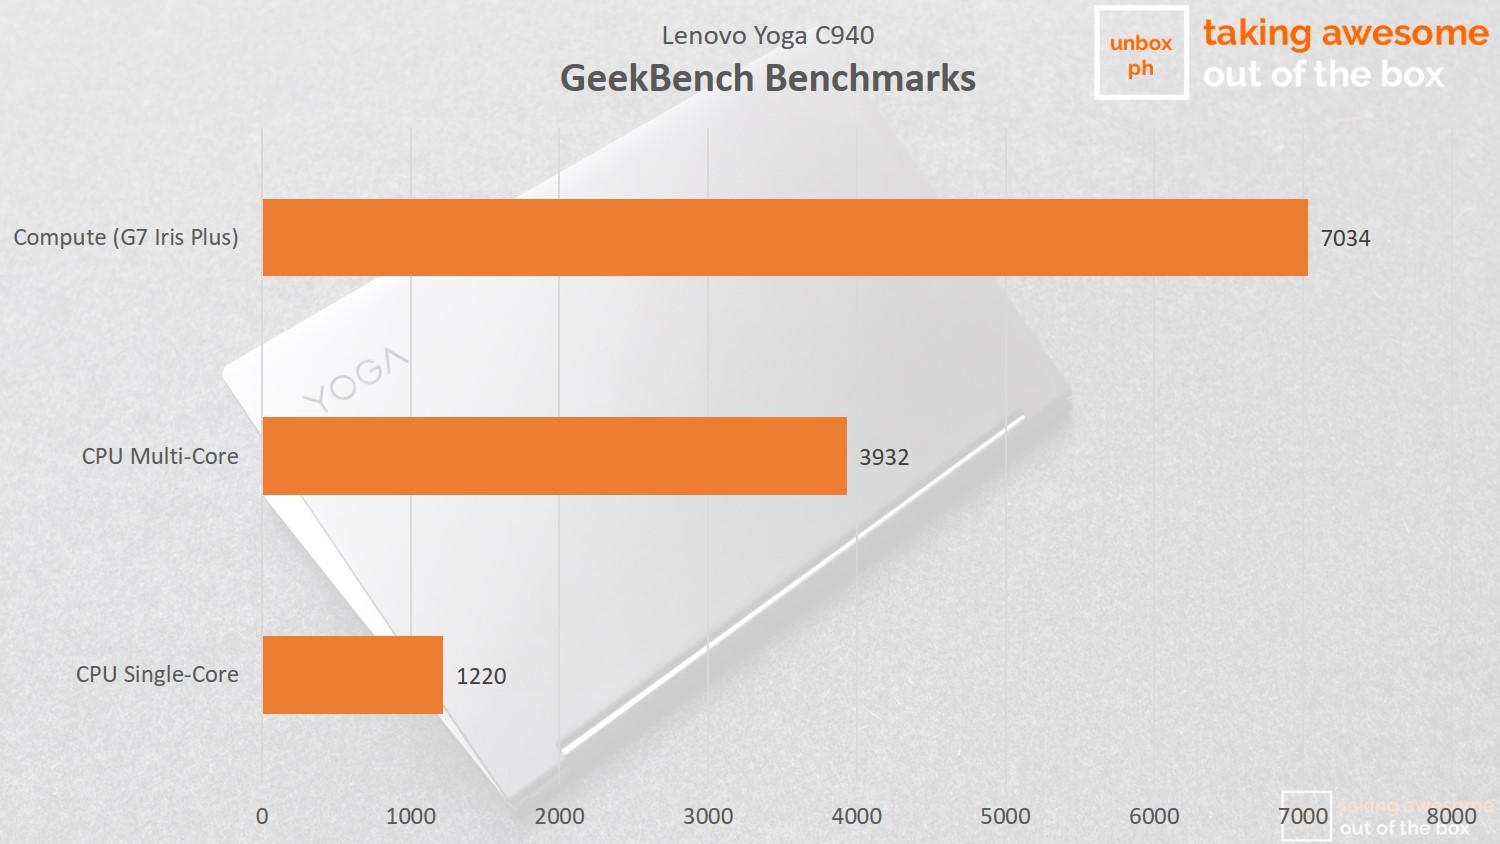 Lenovo Yoga C940 geekbench benchmarks